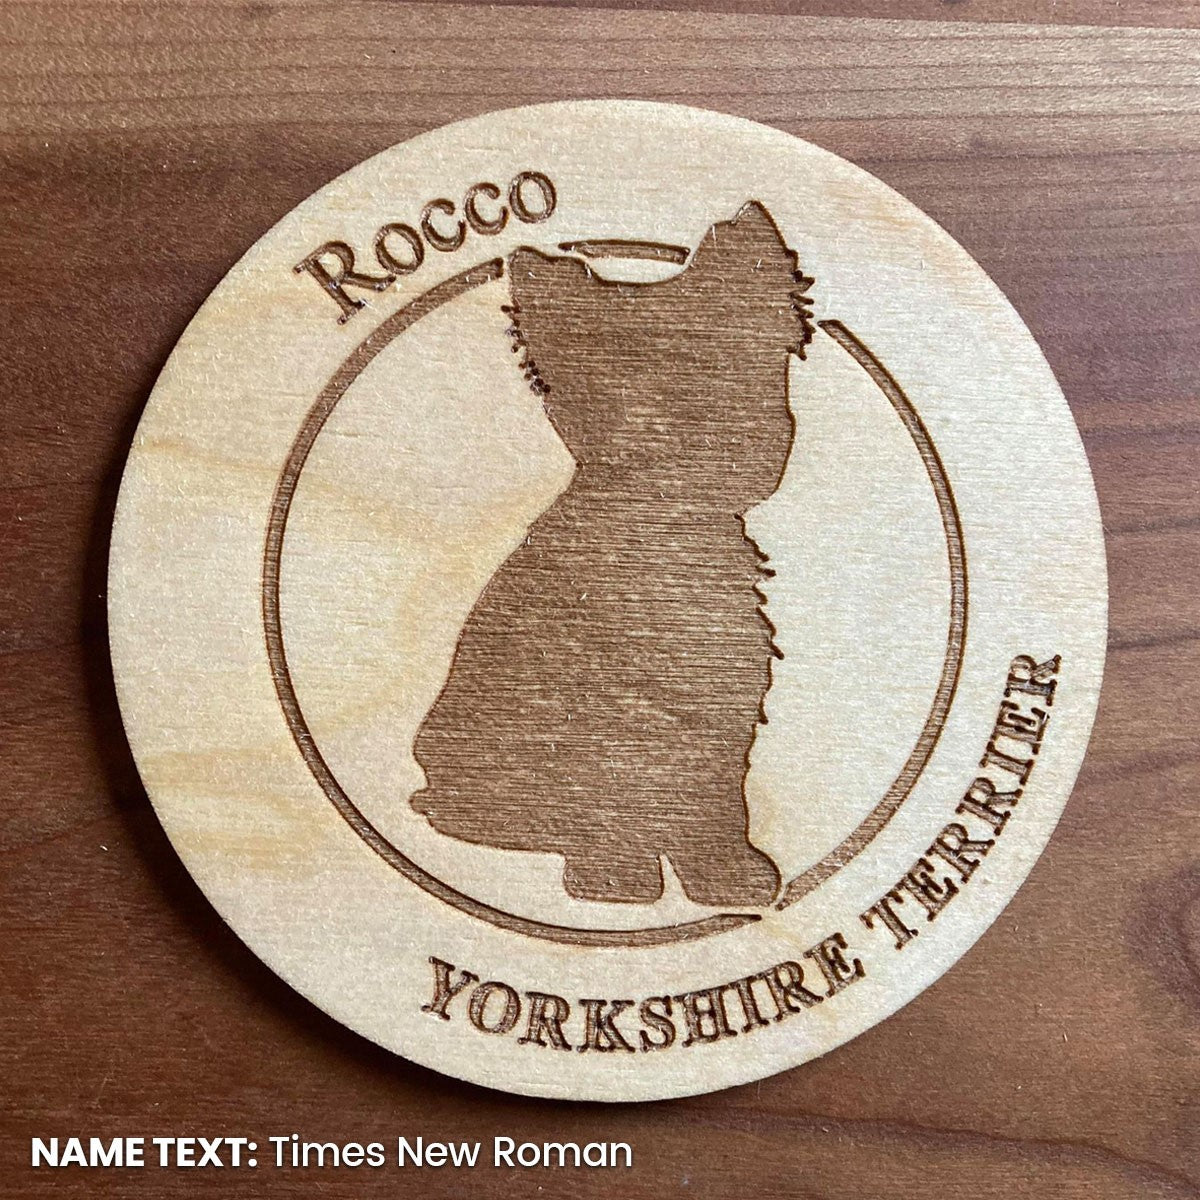 Yorkshire Terrier Coaster